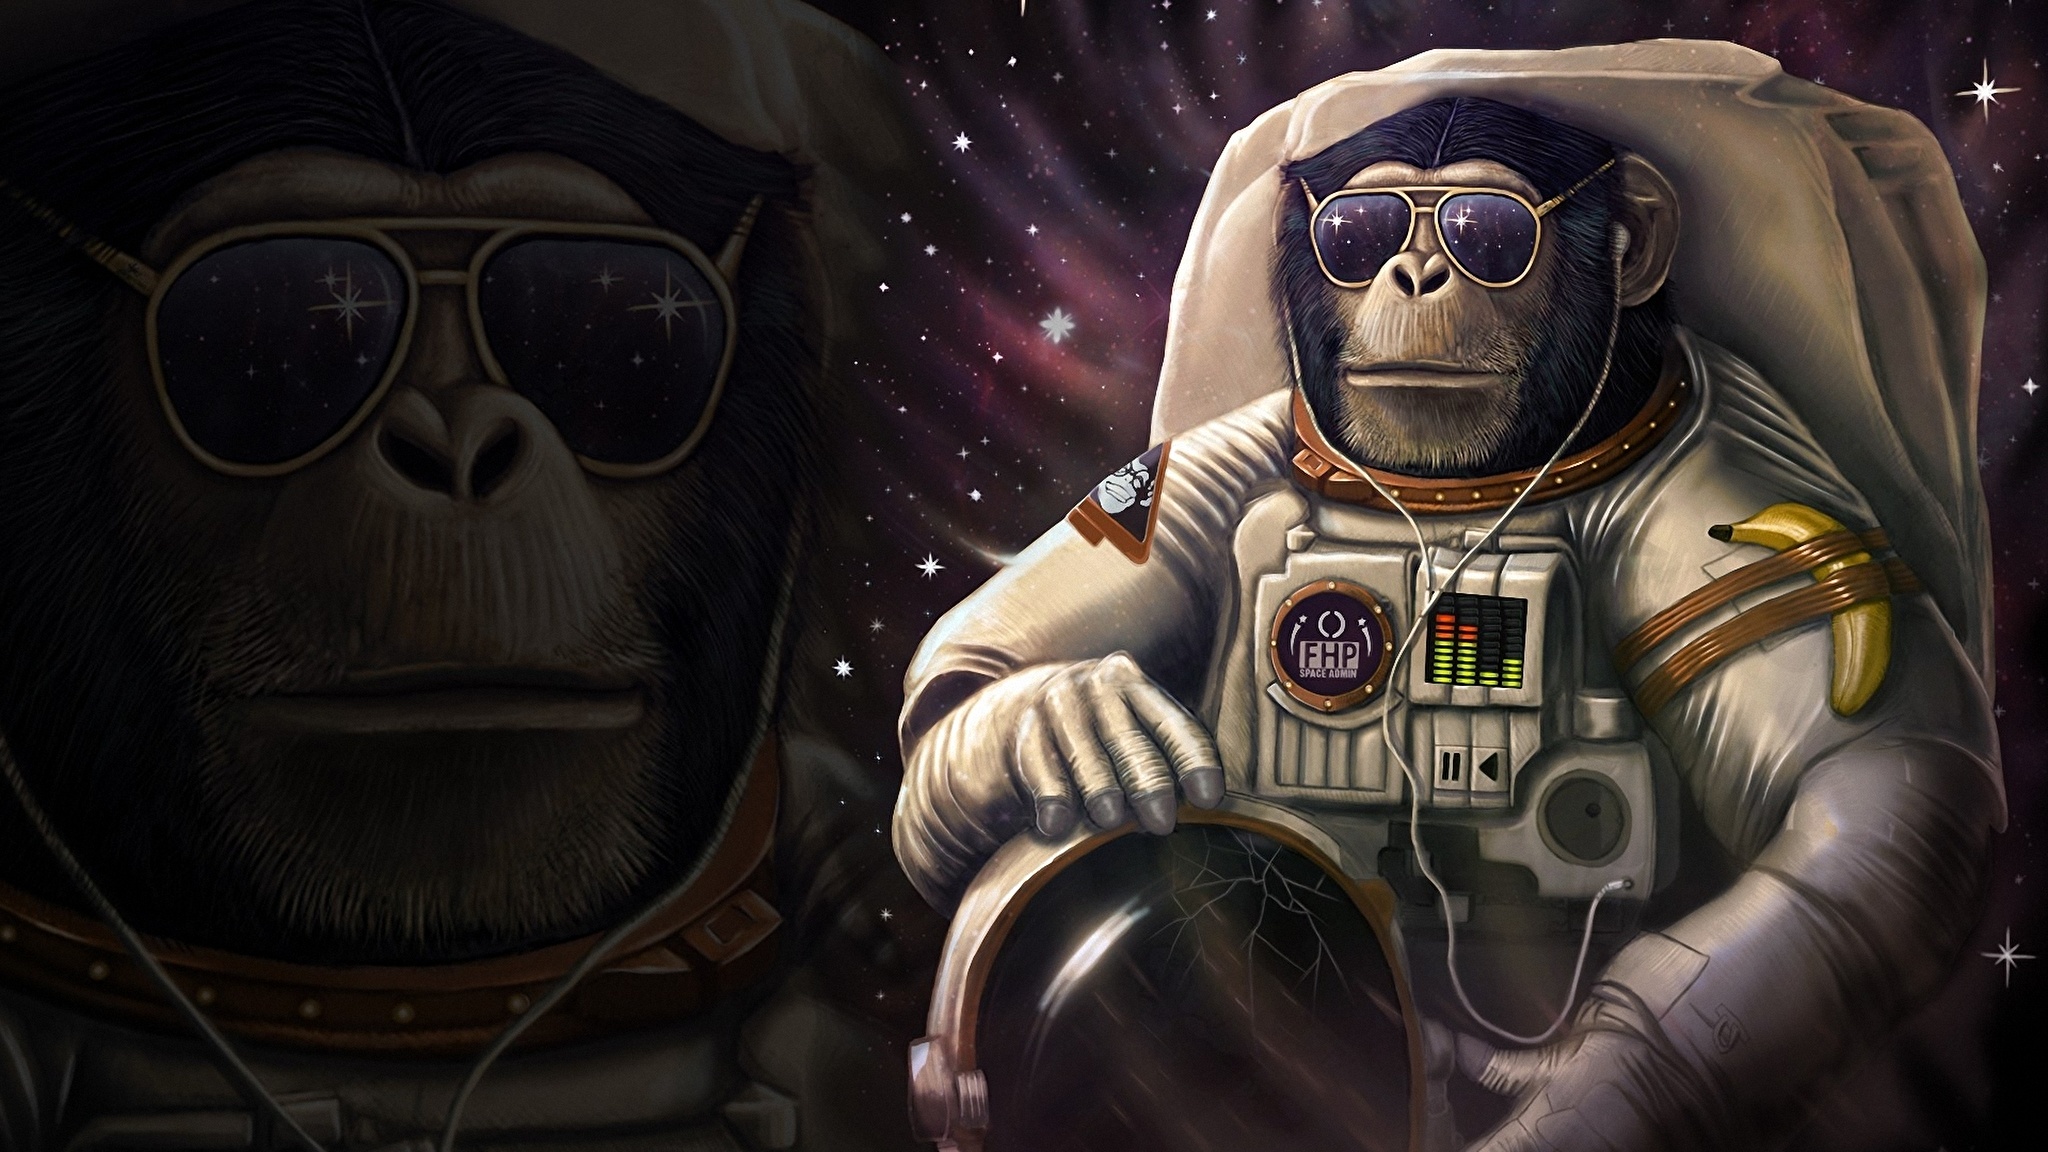 Space monkey. Обезьяна в скафандре. Обезьяна космонавт. Обезьяны в космосе. Космонавт арт.